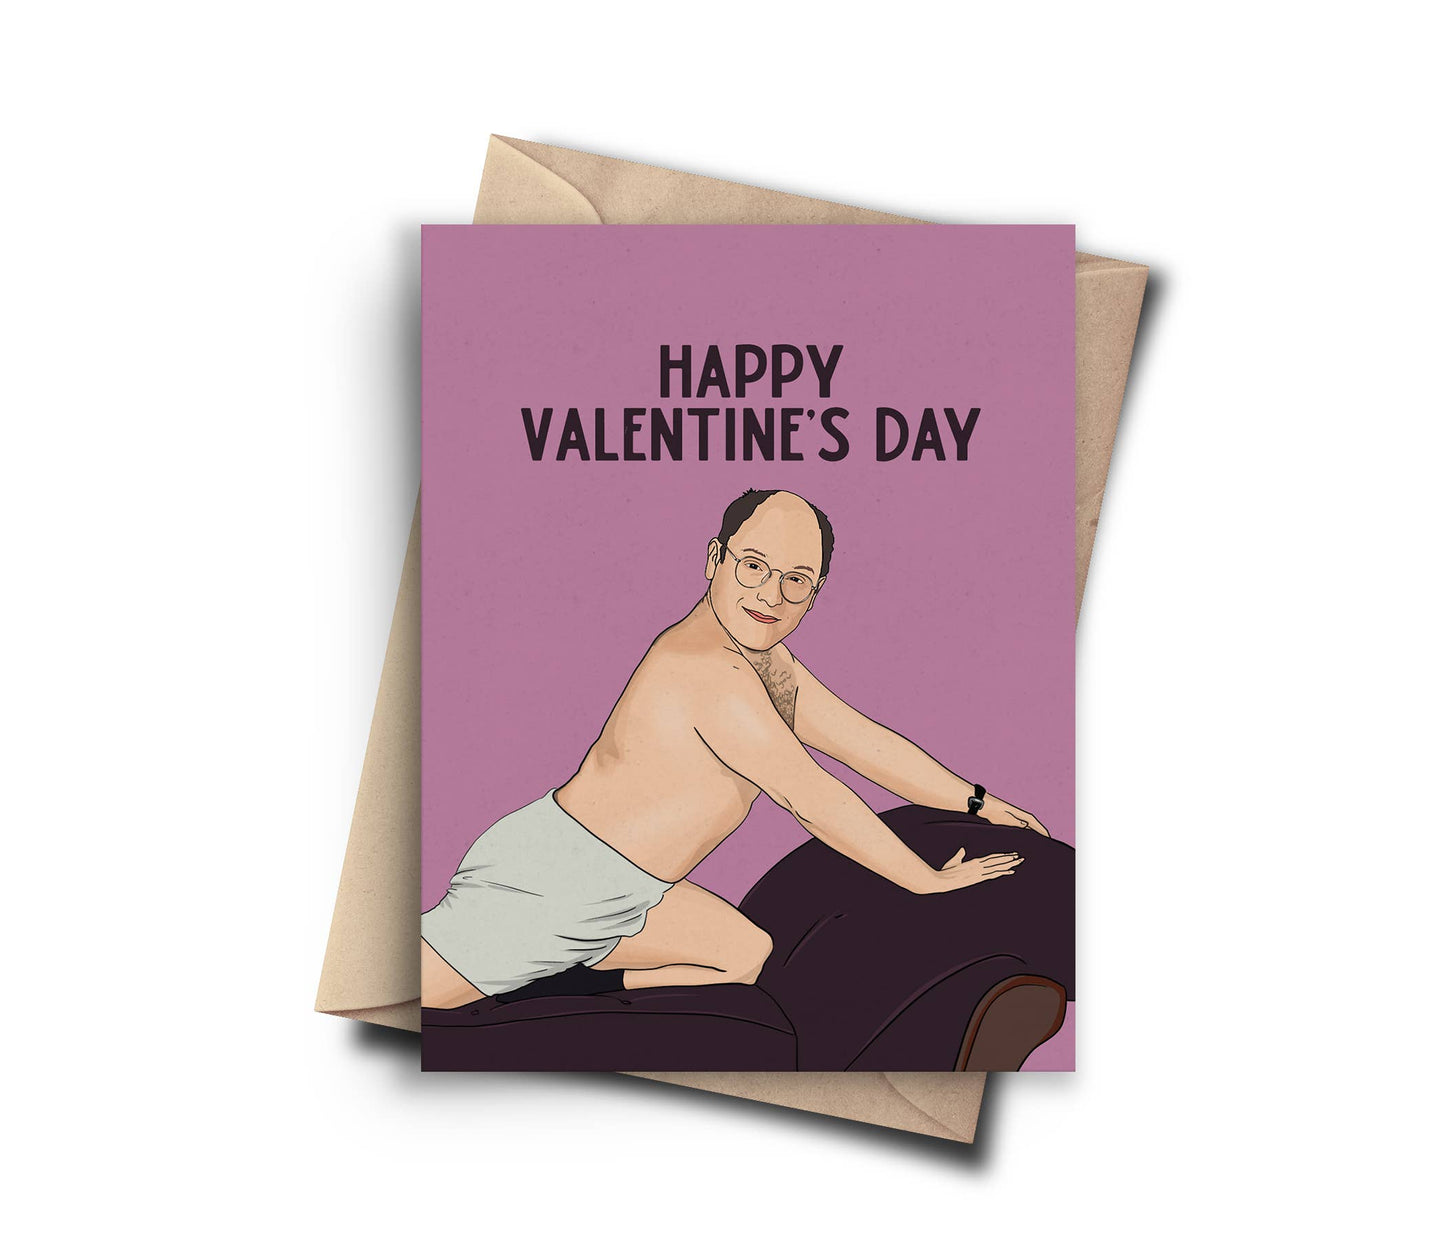 Seinfeld George Costanza Valentines Day Card